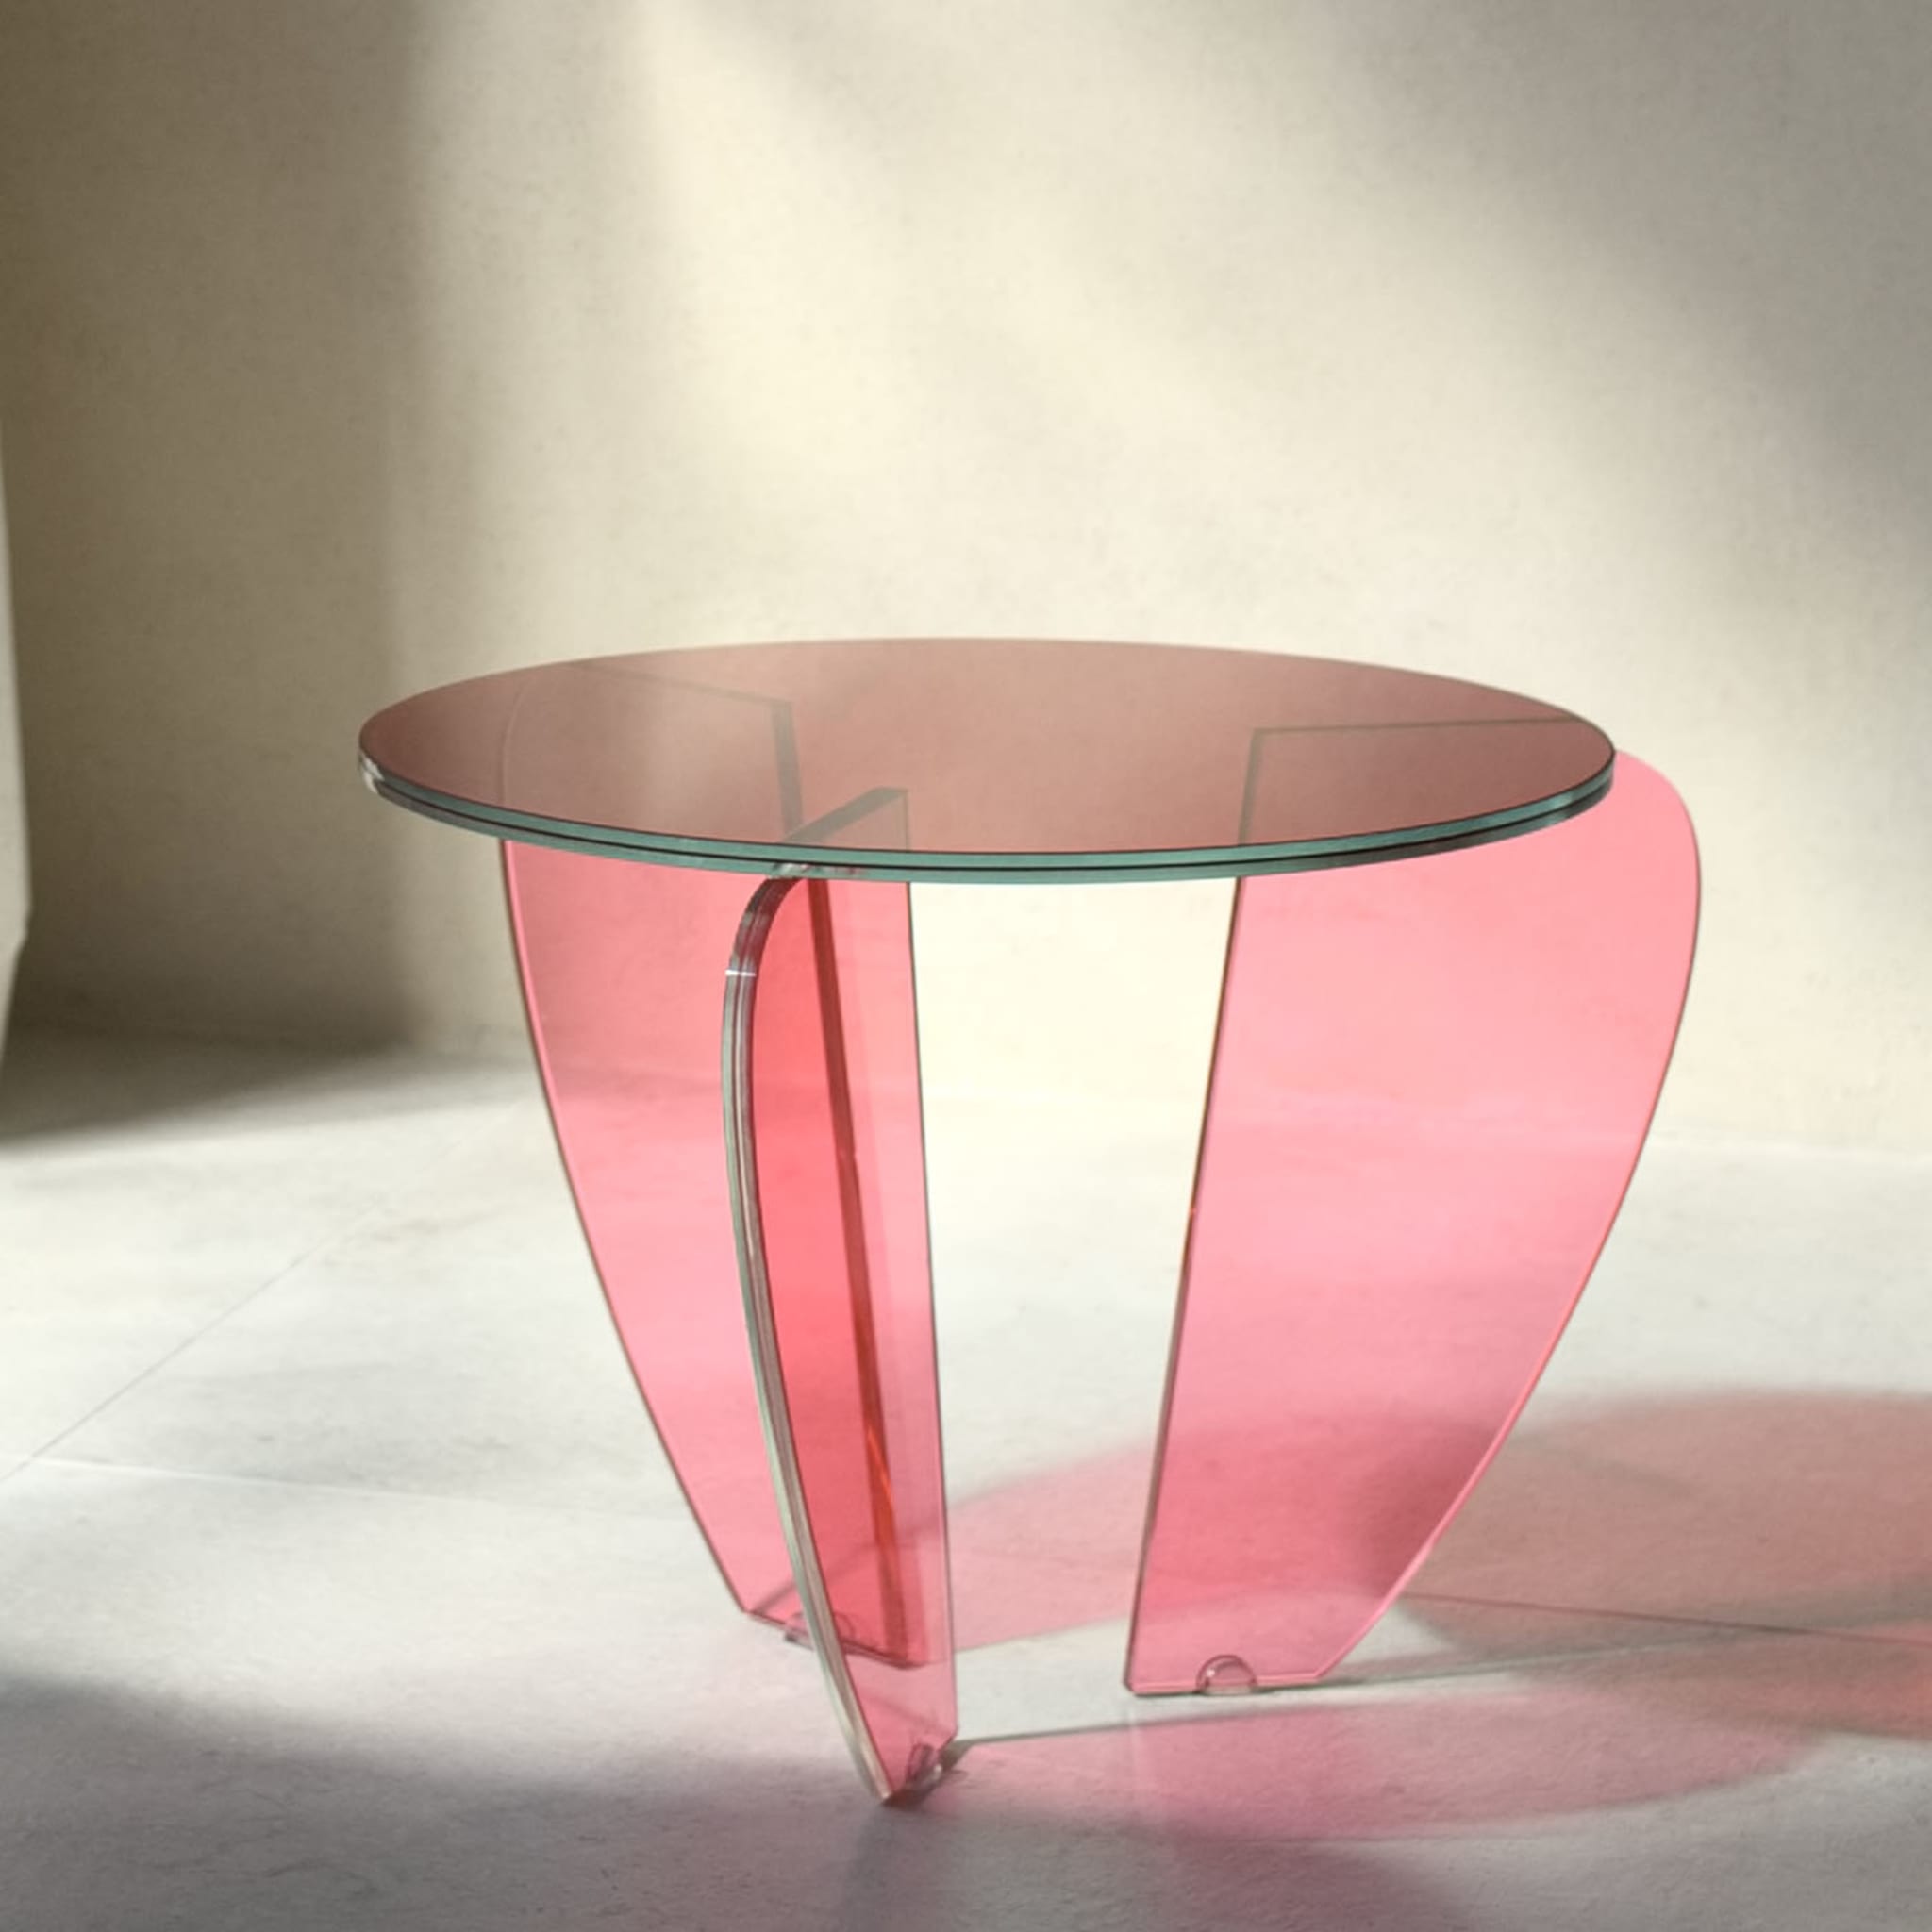 Teo Small Colored Side Table by Andrea Petterini - Alternative view 1